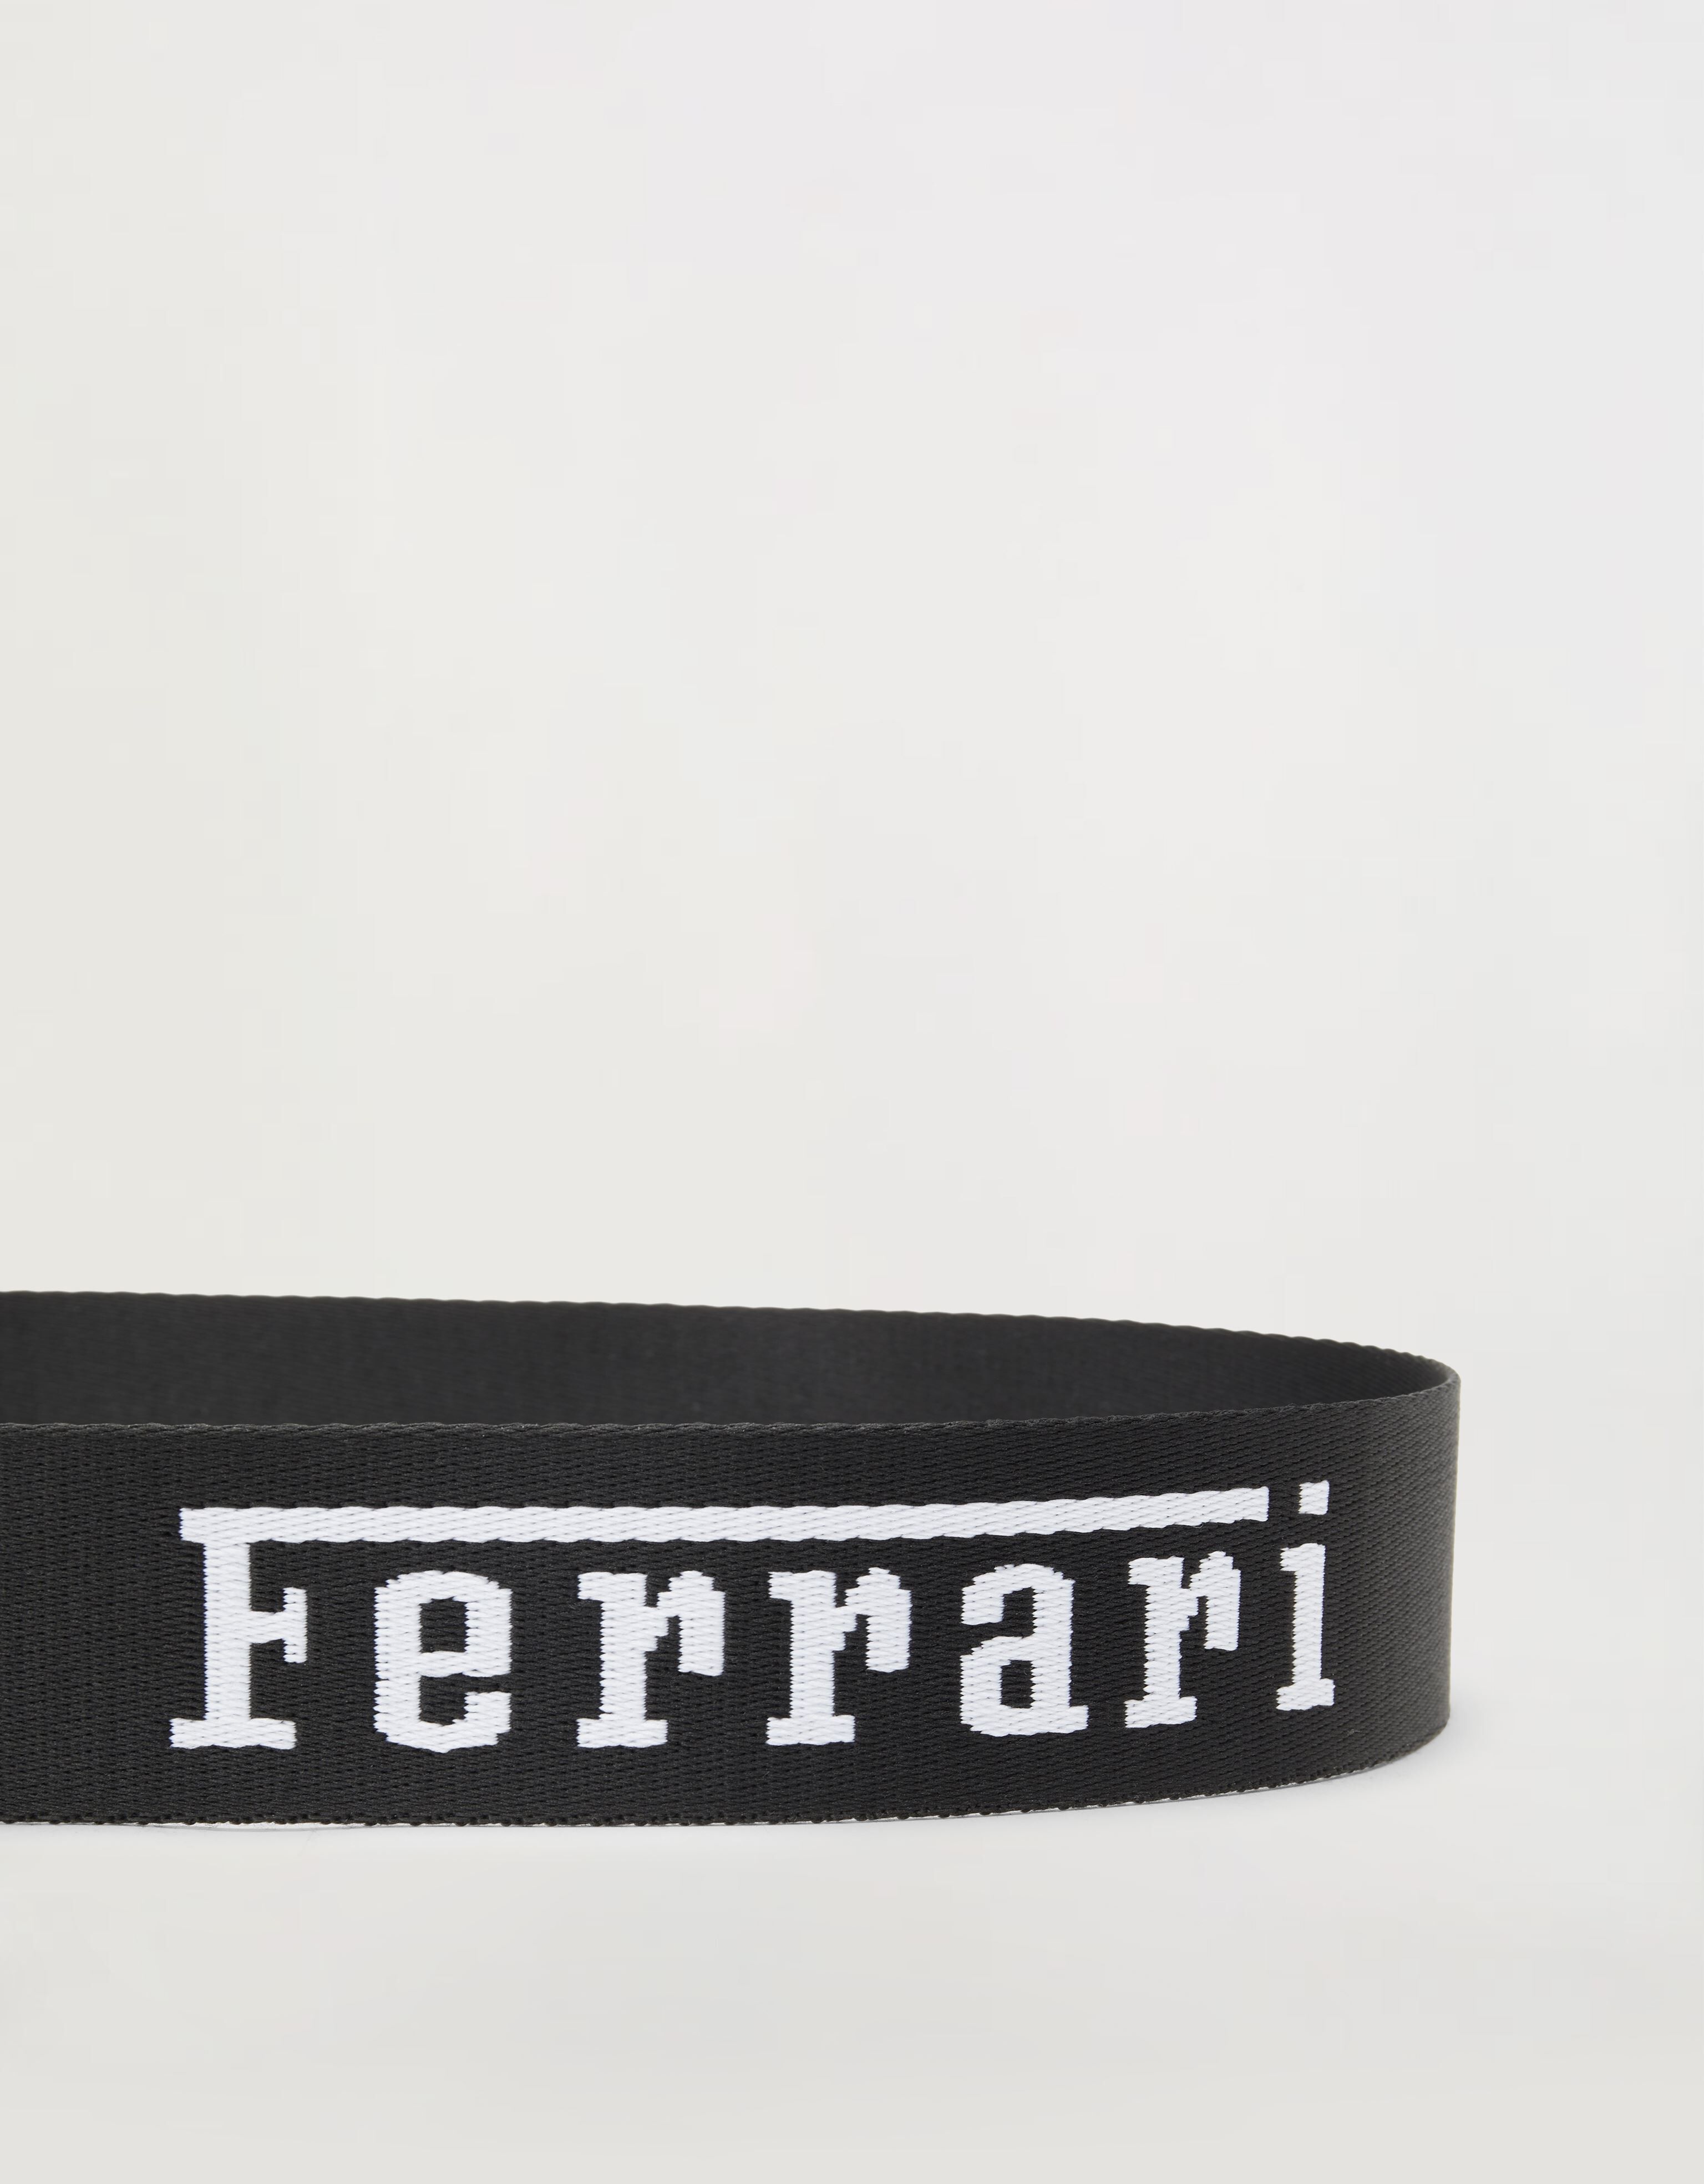 Ferrari 法拉利徽标饰带腰带 黑色 20017f